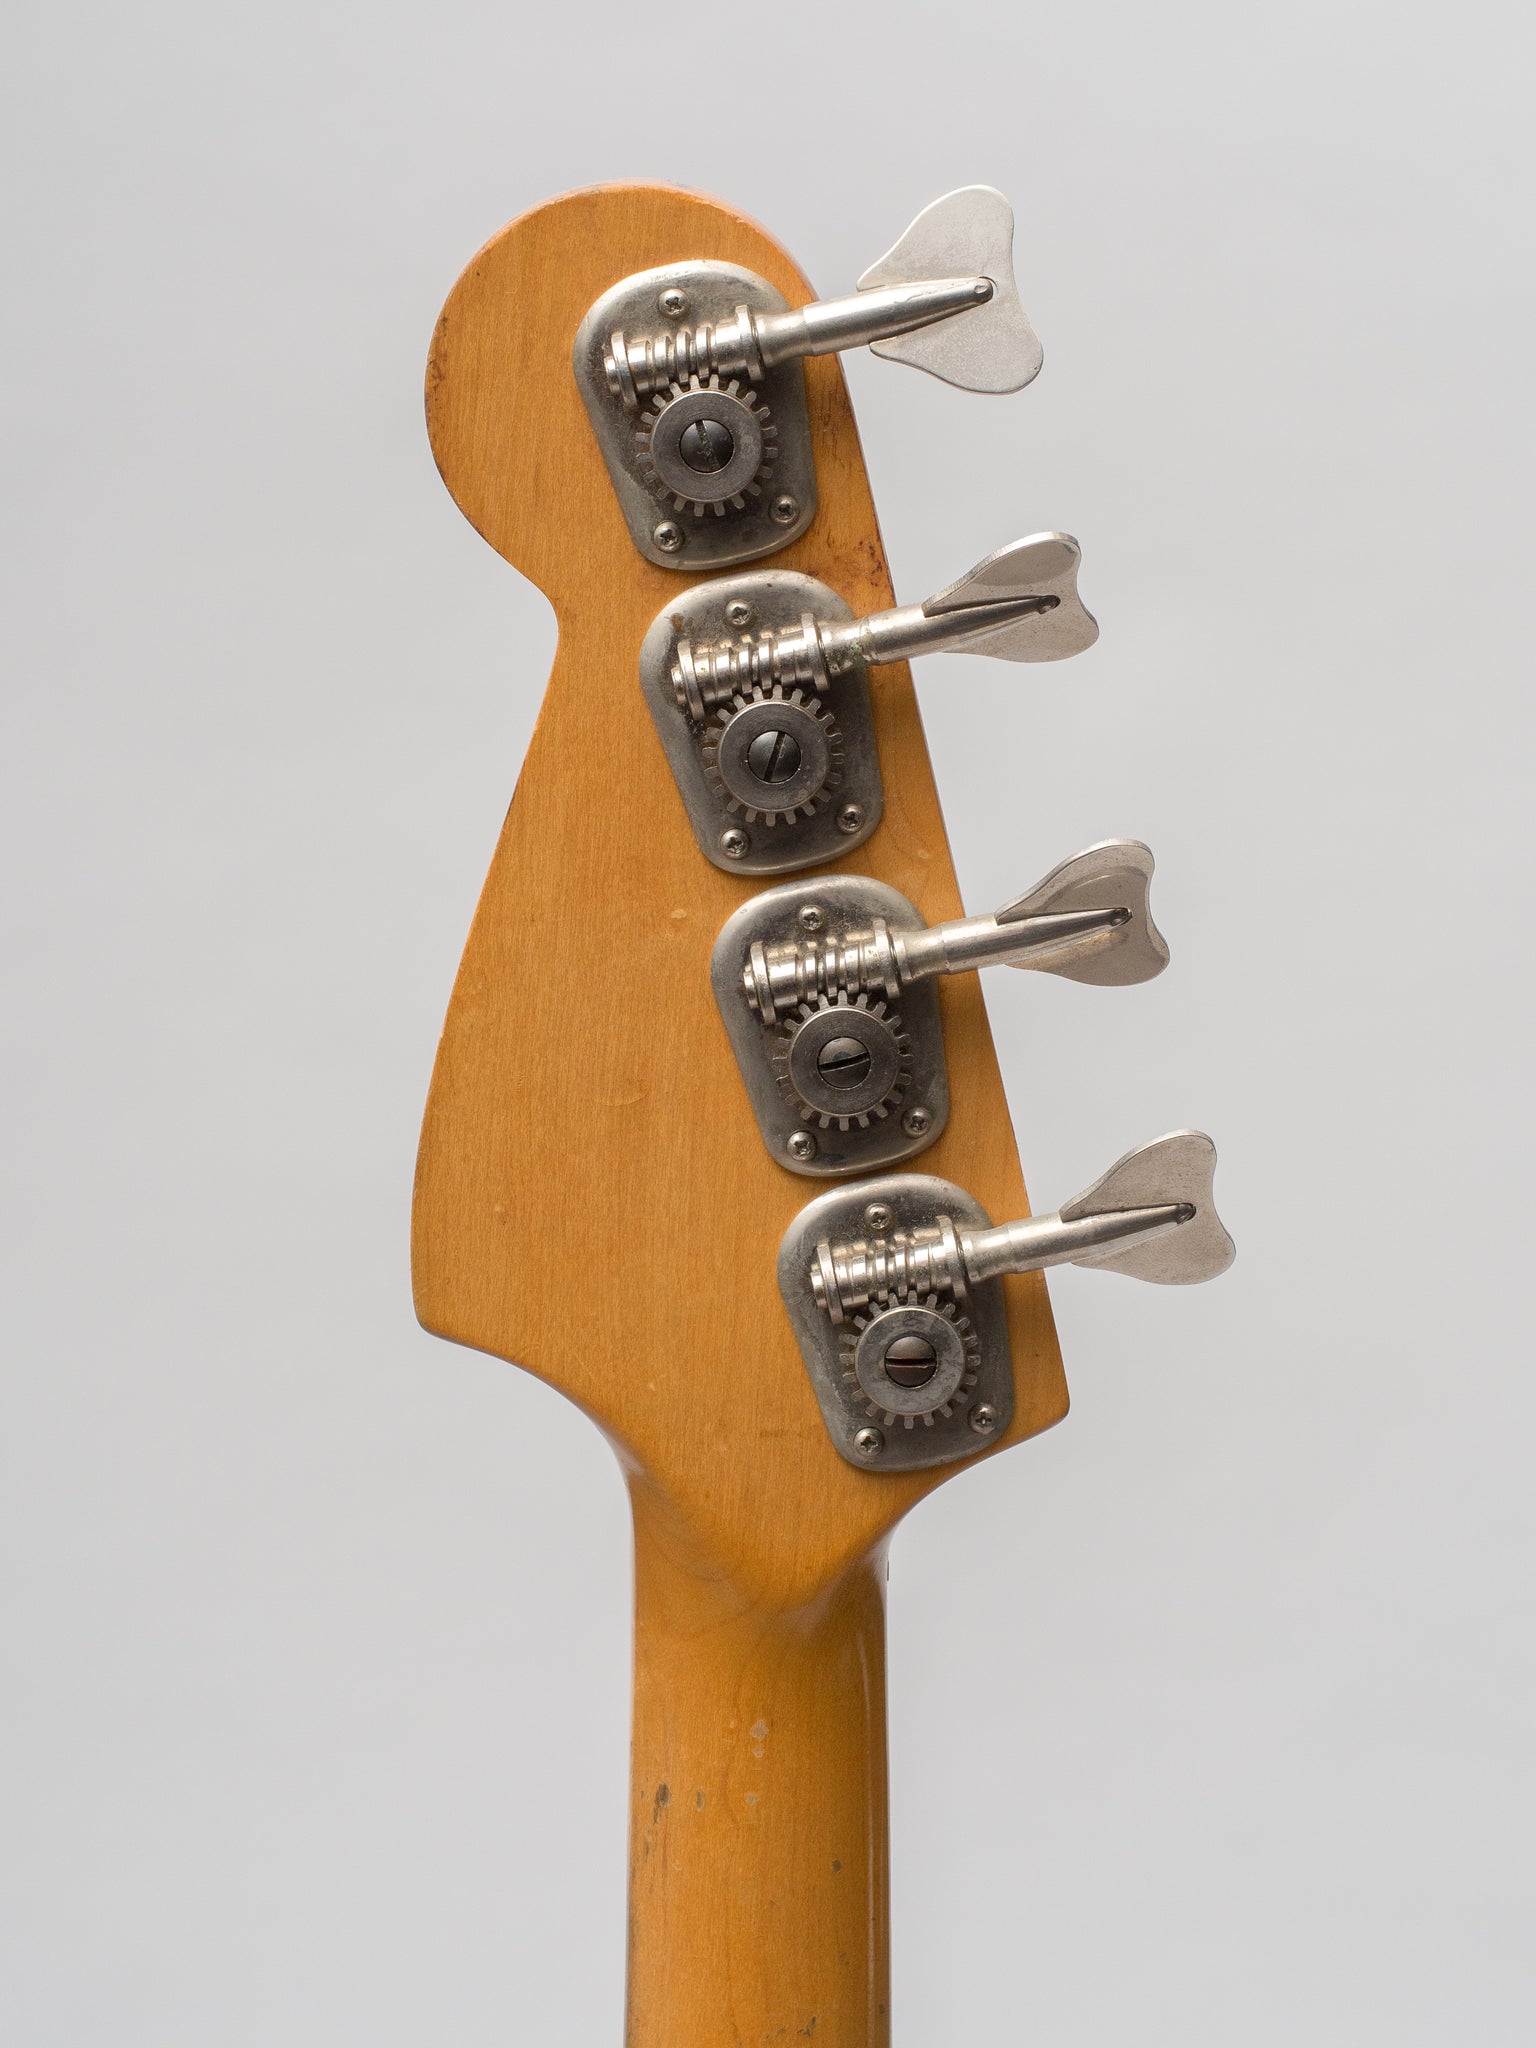 1973 Fender Musicmaster Bass